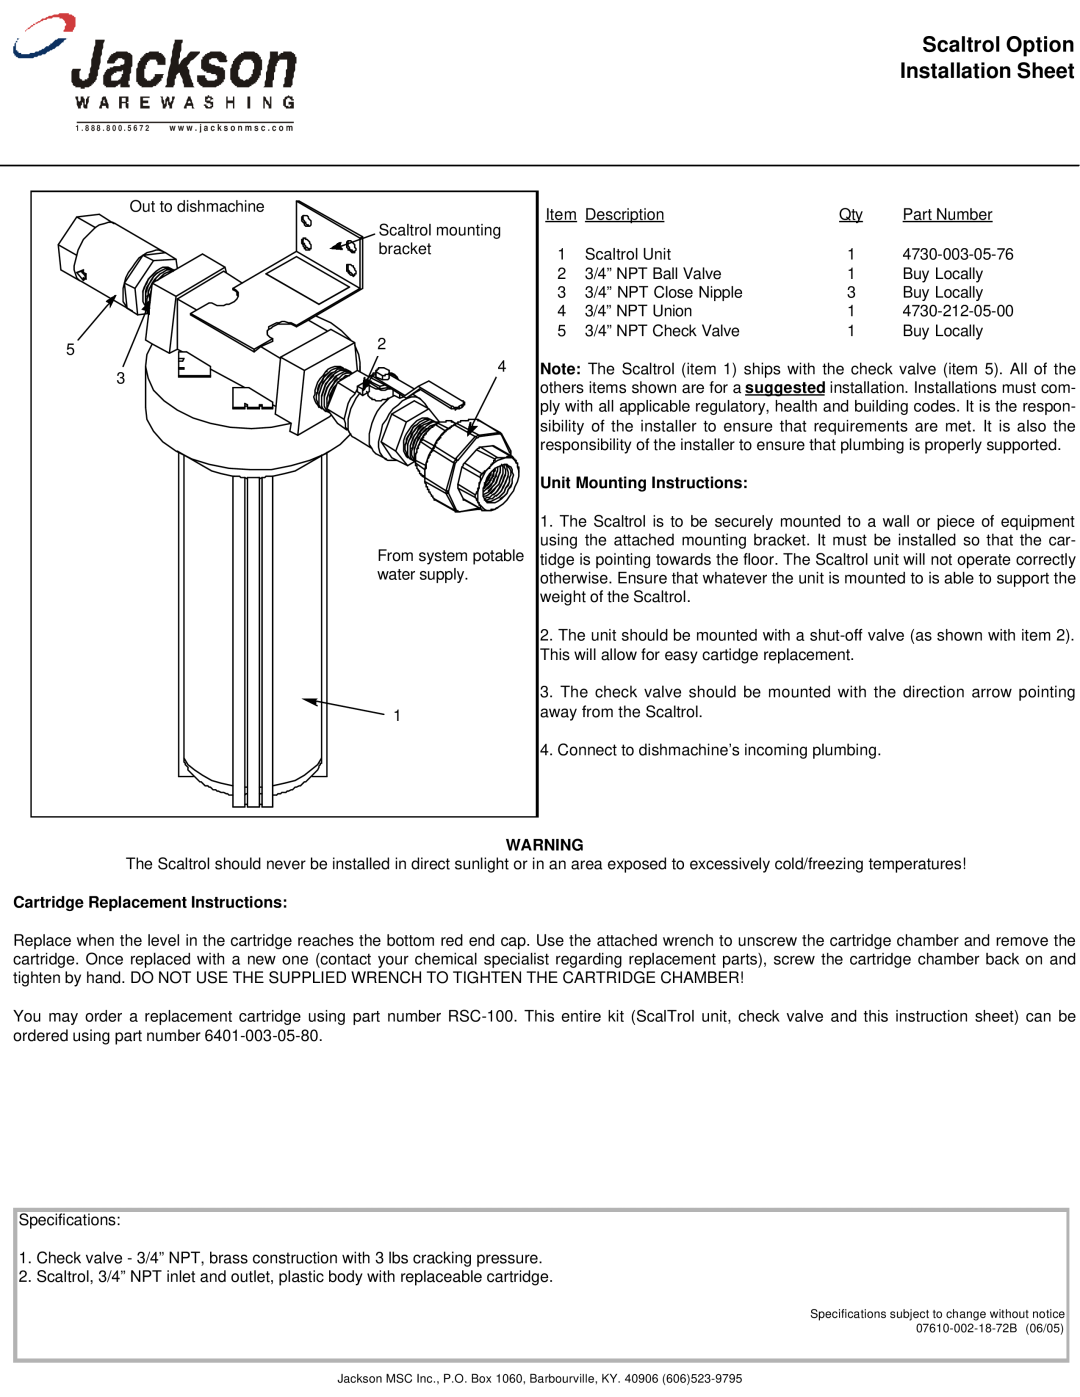 Jackson instruction sheet Scaltrol Option Installation Sheet, Unit Mounting Instructions 